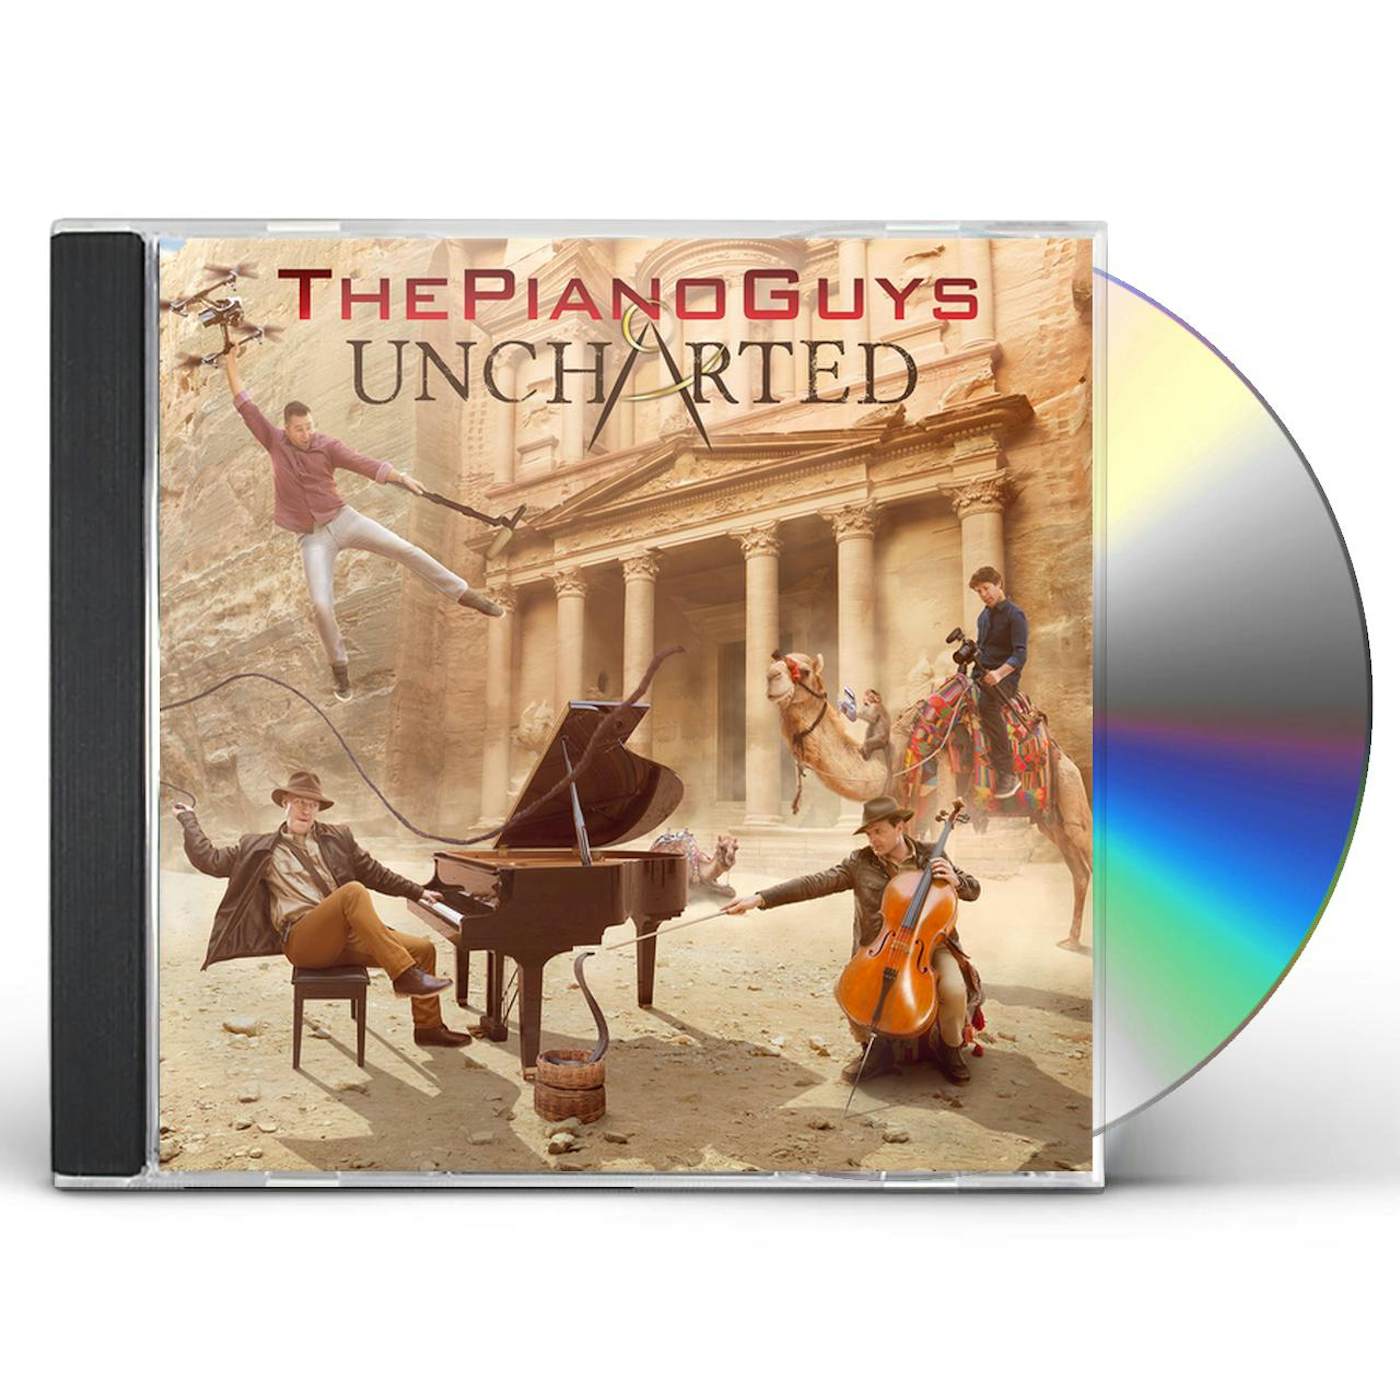 Piano Guys Family Christmas CD